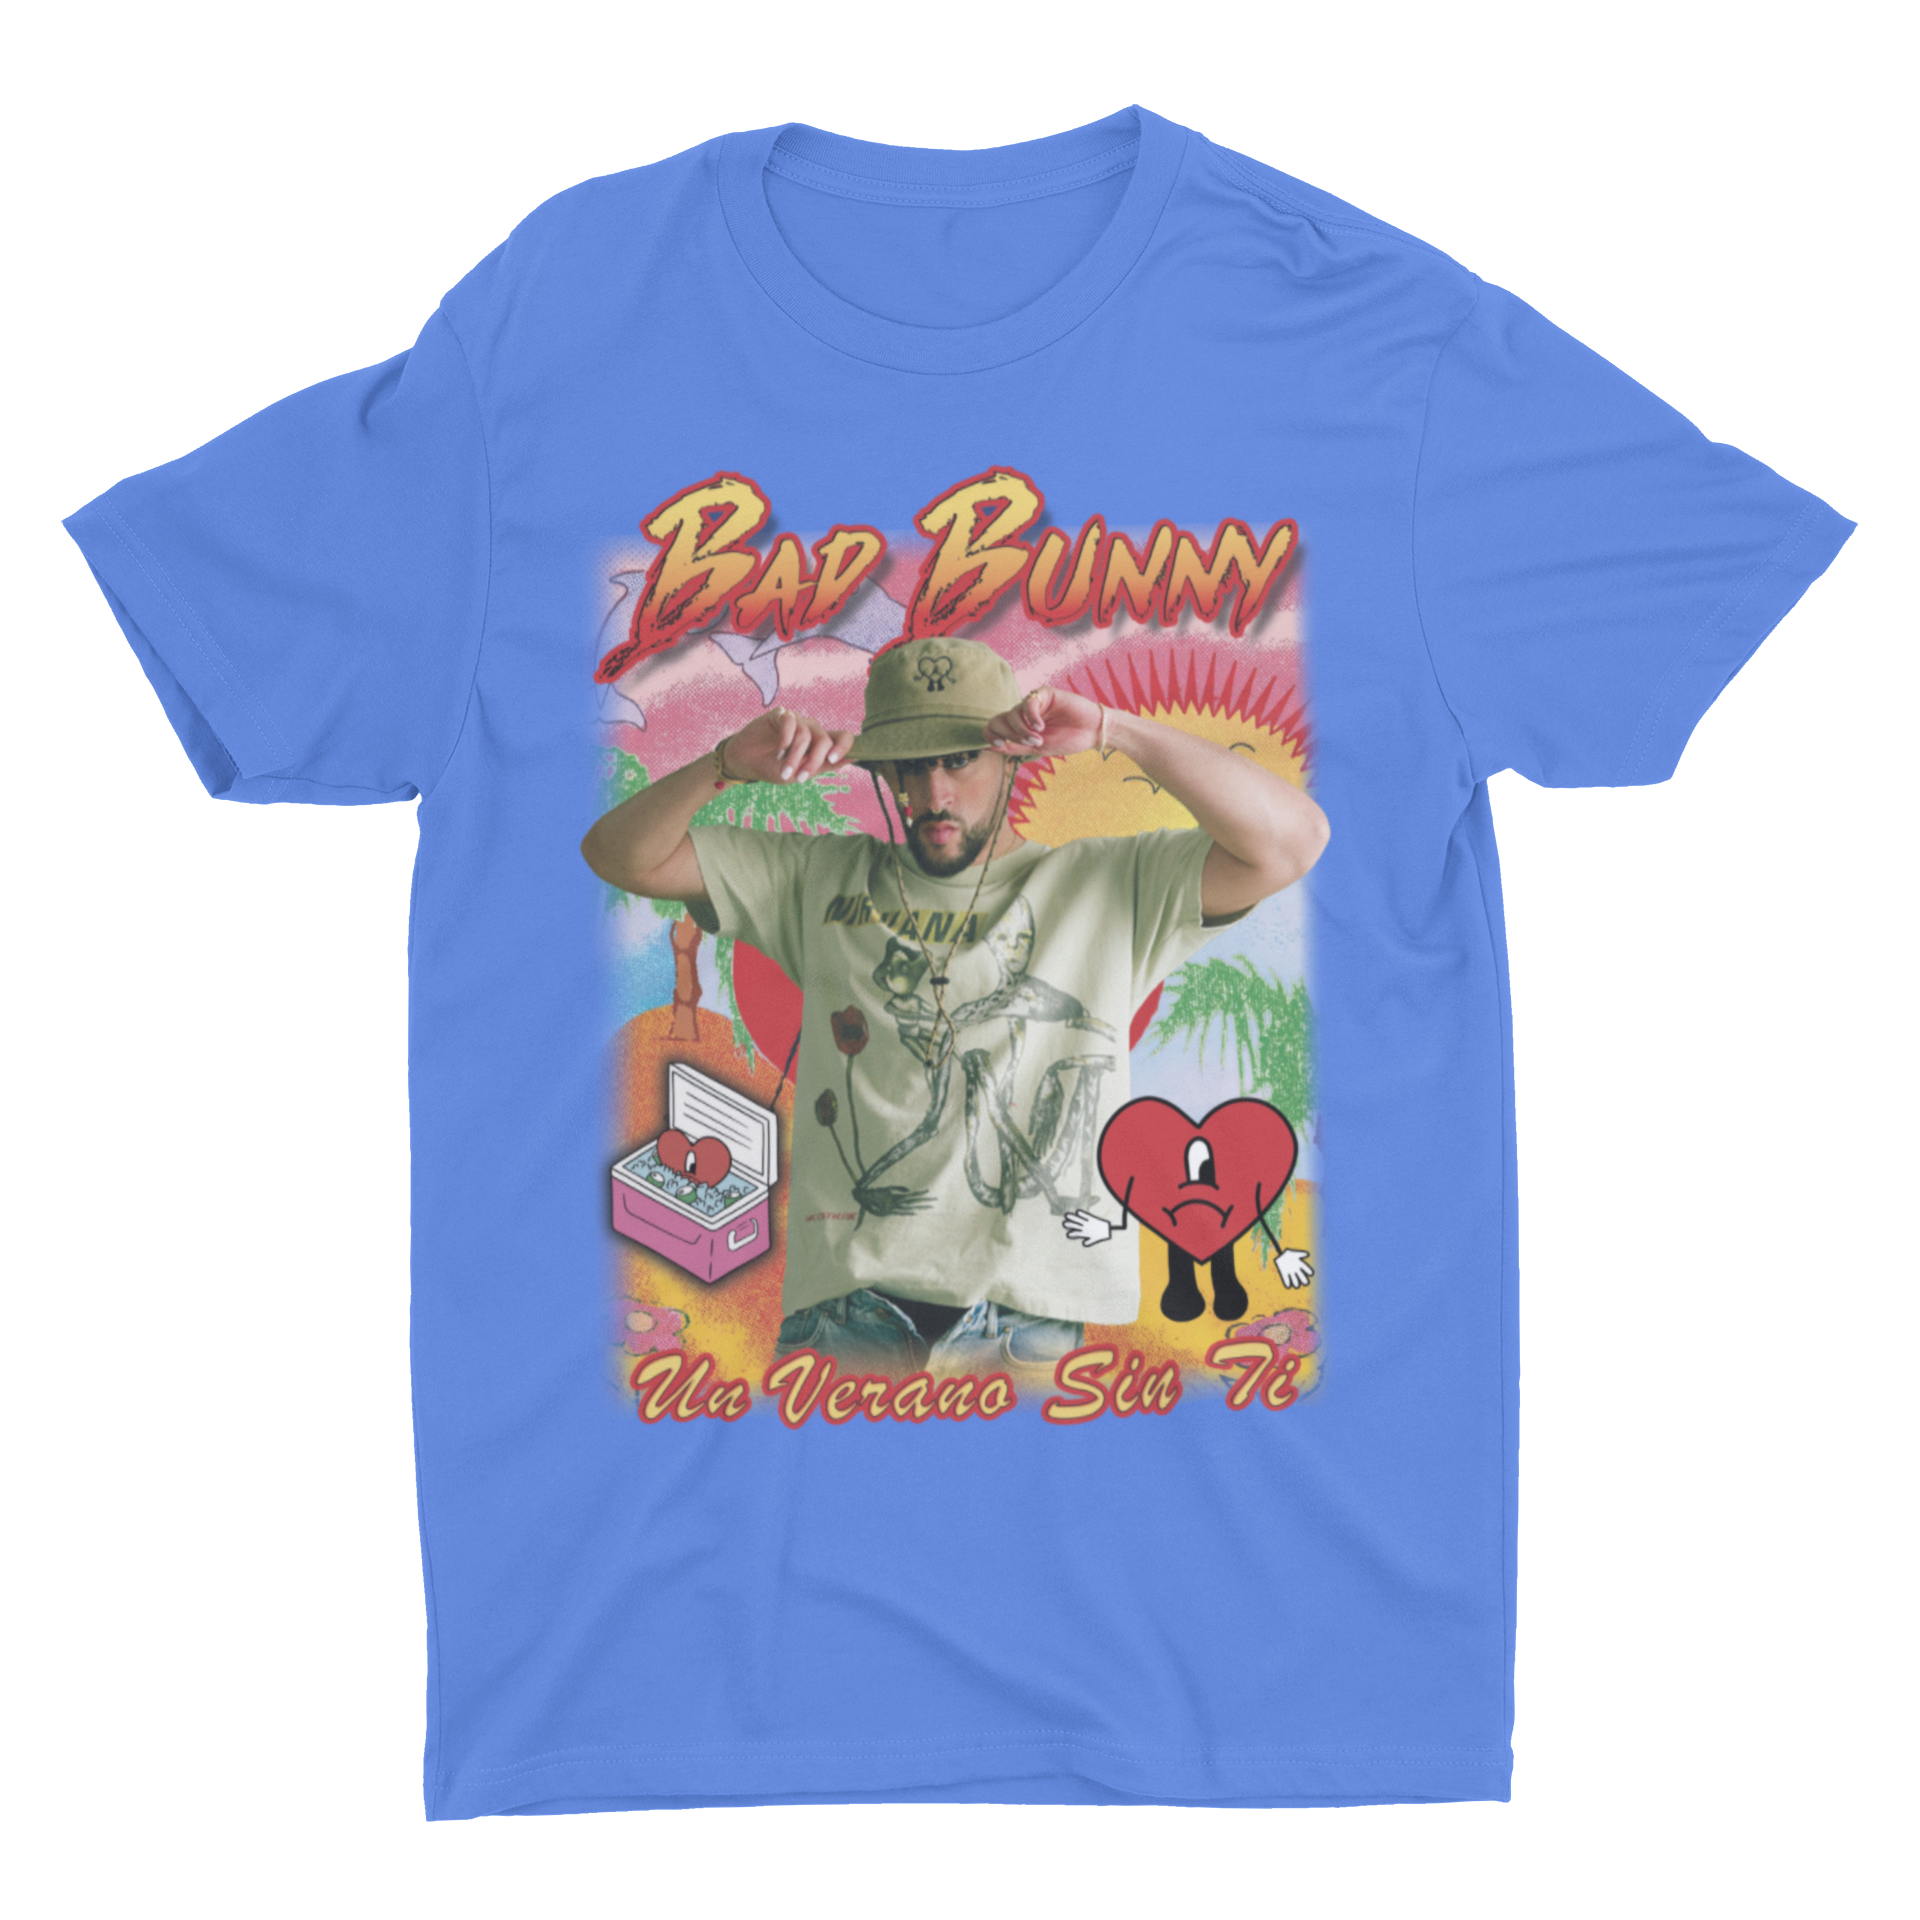 Bad Bunny World's Hottest Tour Stadiums 2022 Bunny Un Verano Sin Ti Bad  Bunny Shirt - Best Seller Shirts Design In Usa